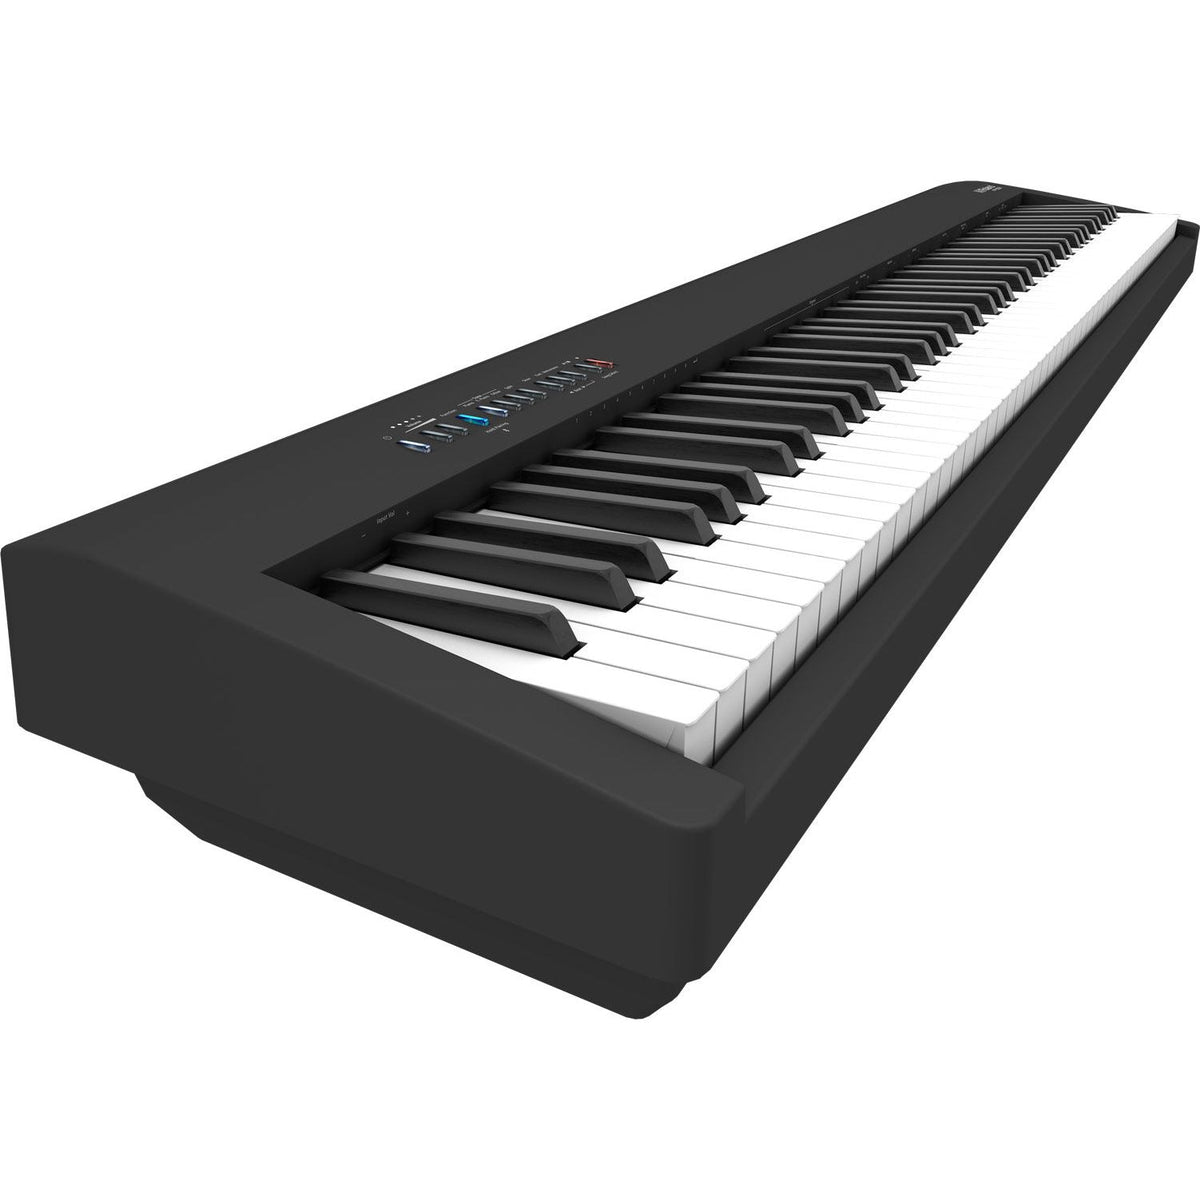 Roland FP-30X Digital Piano Black